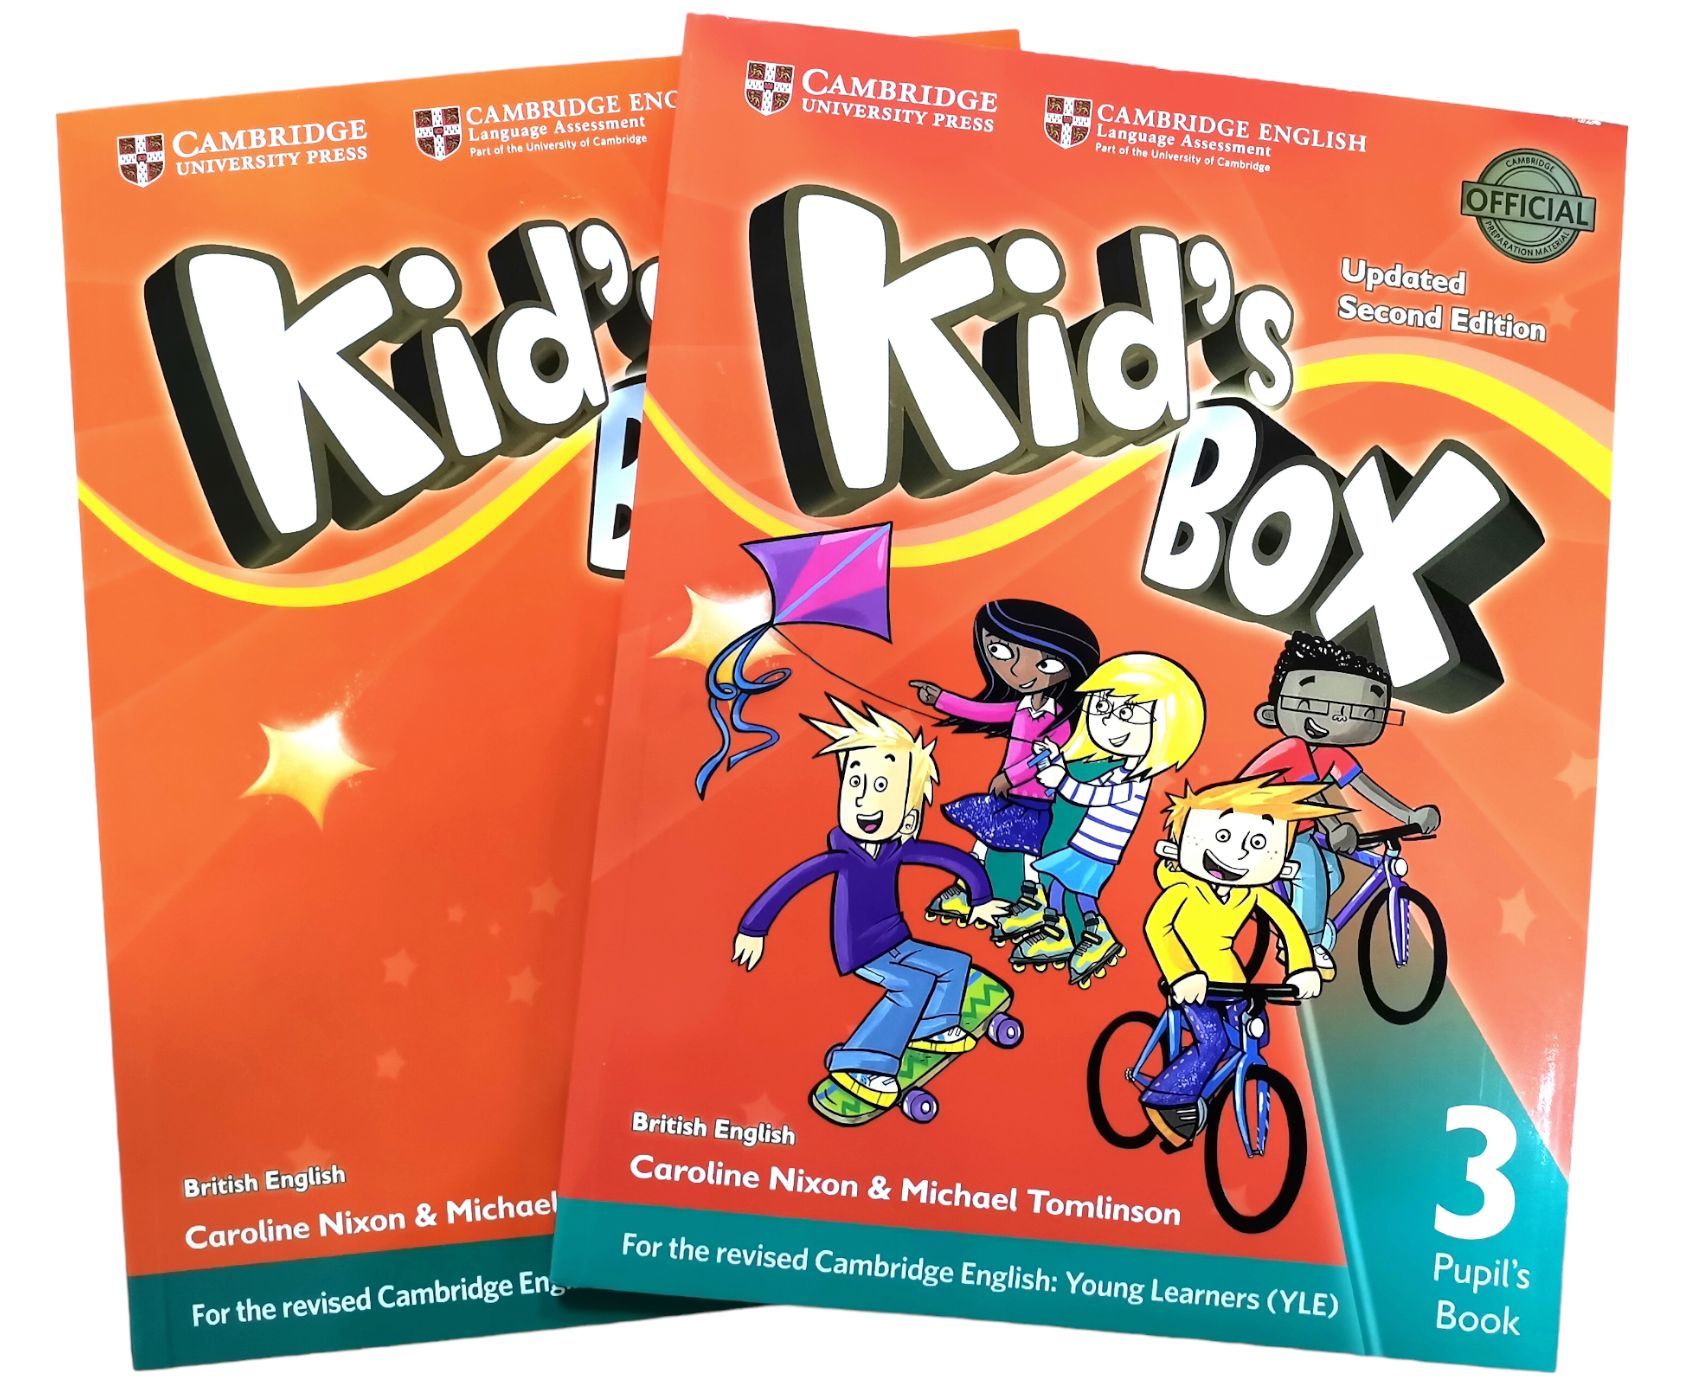 Kids Box 3 activity book. Kids Box 1 pupil's book. Игры и книжки Кидз бокс. DVD бук. Kids box 2 pupils book